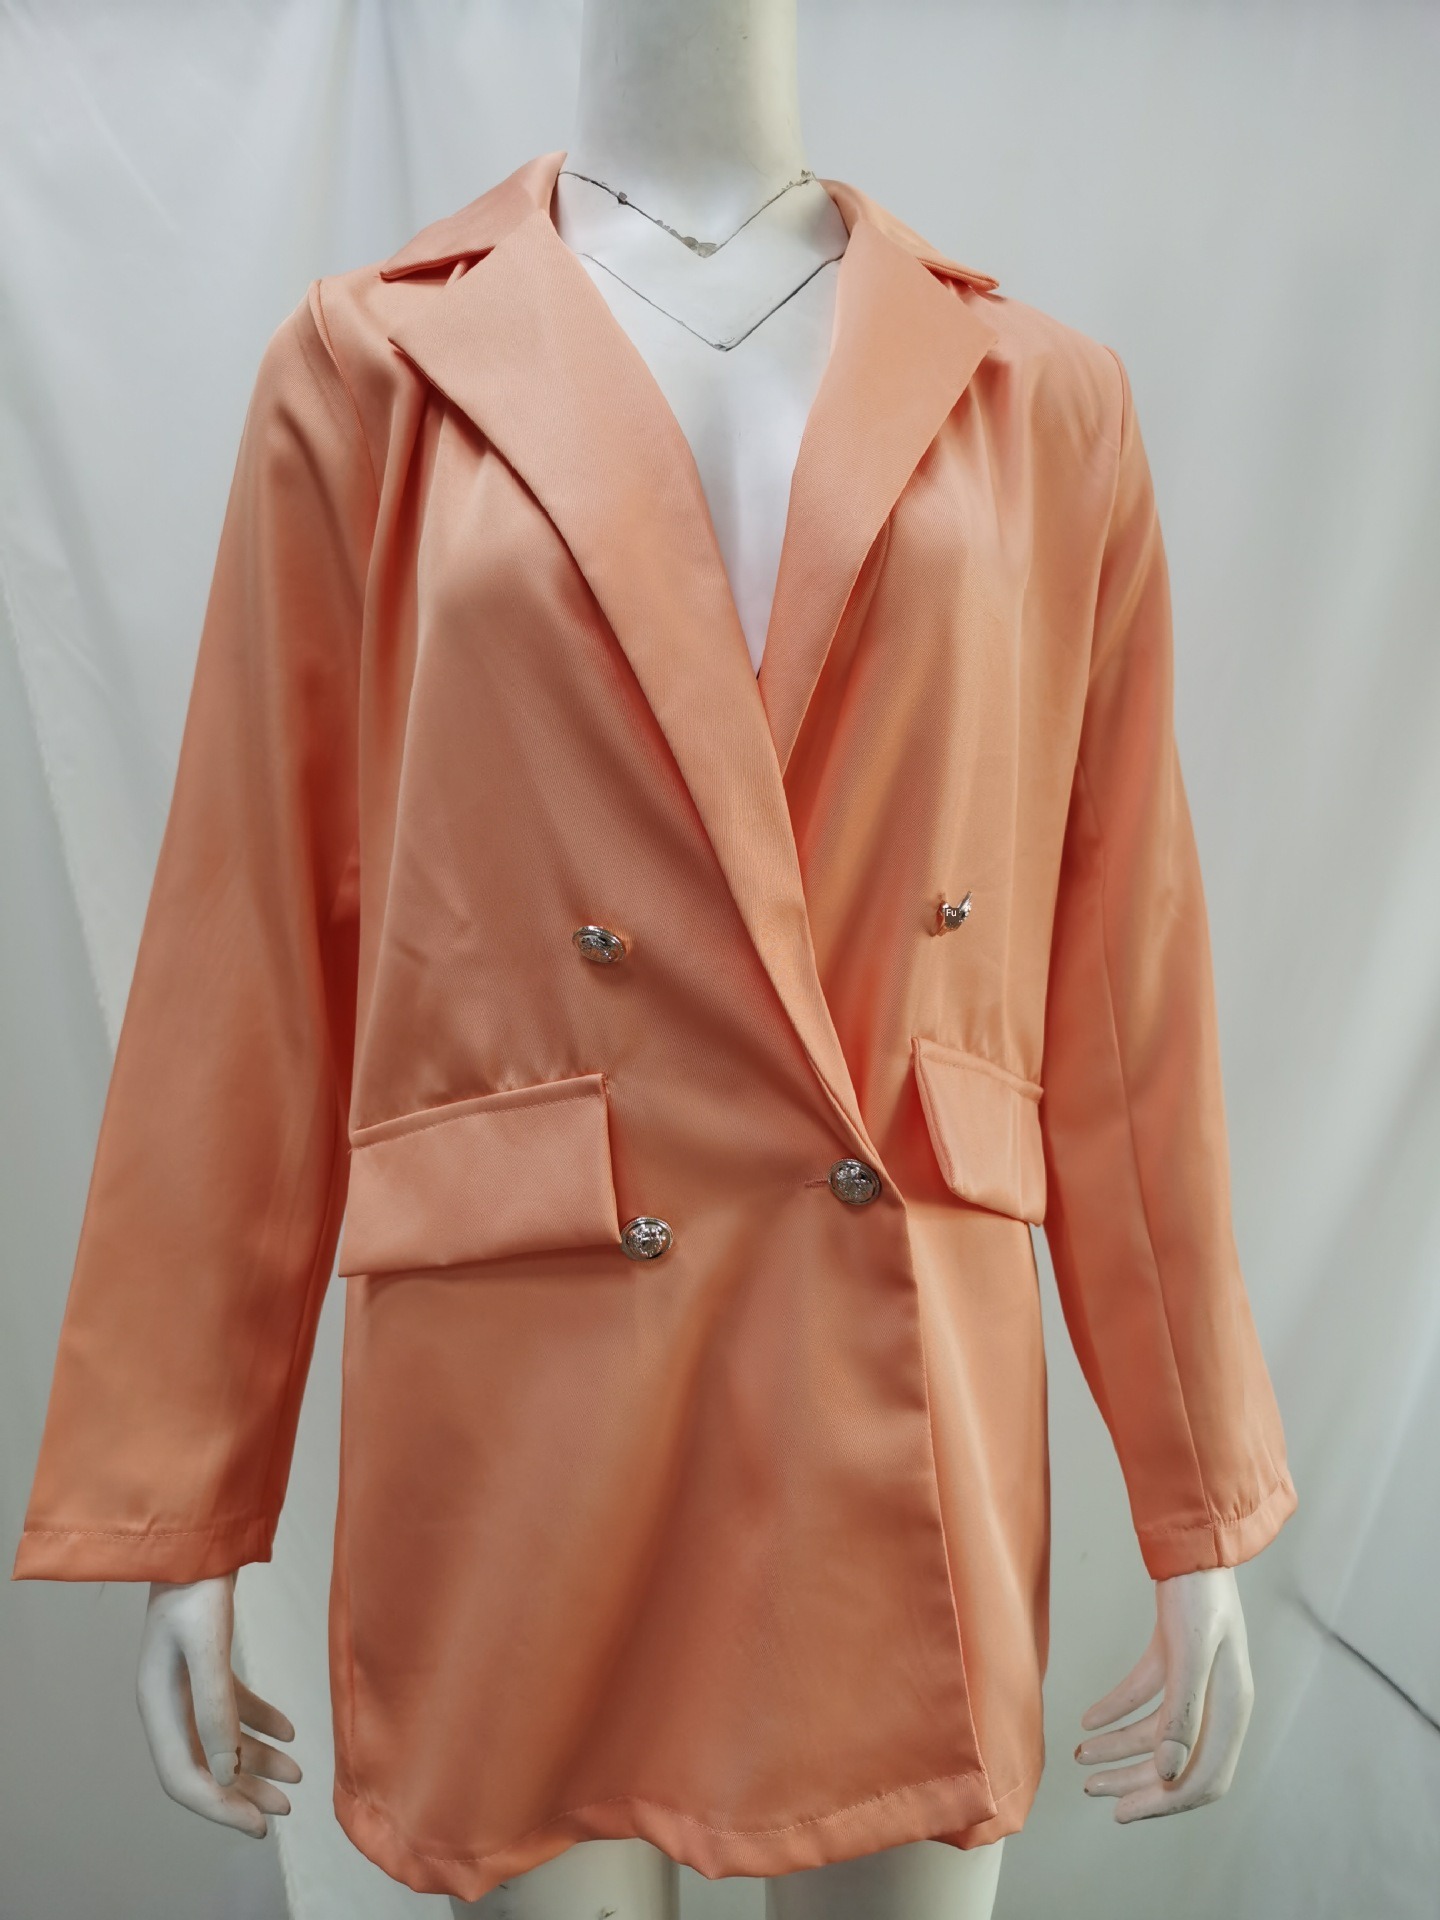 Coat s   Casual   Blazer   Jacket s   Suit s   women   Plus   size   big   Ladies